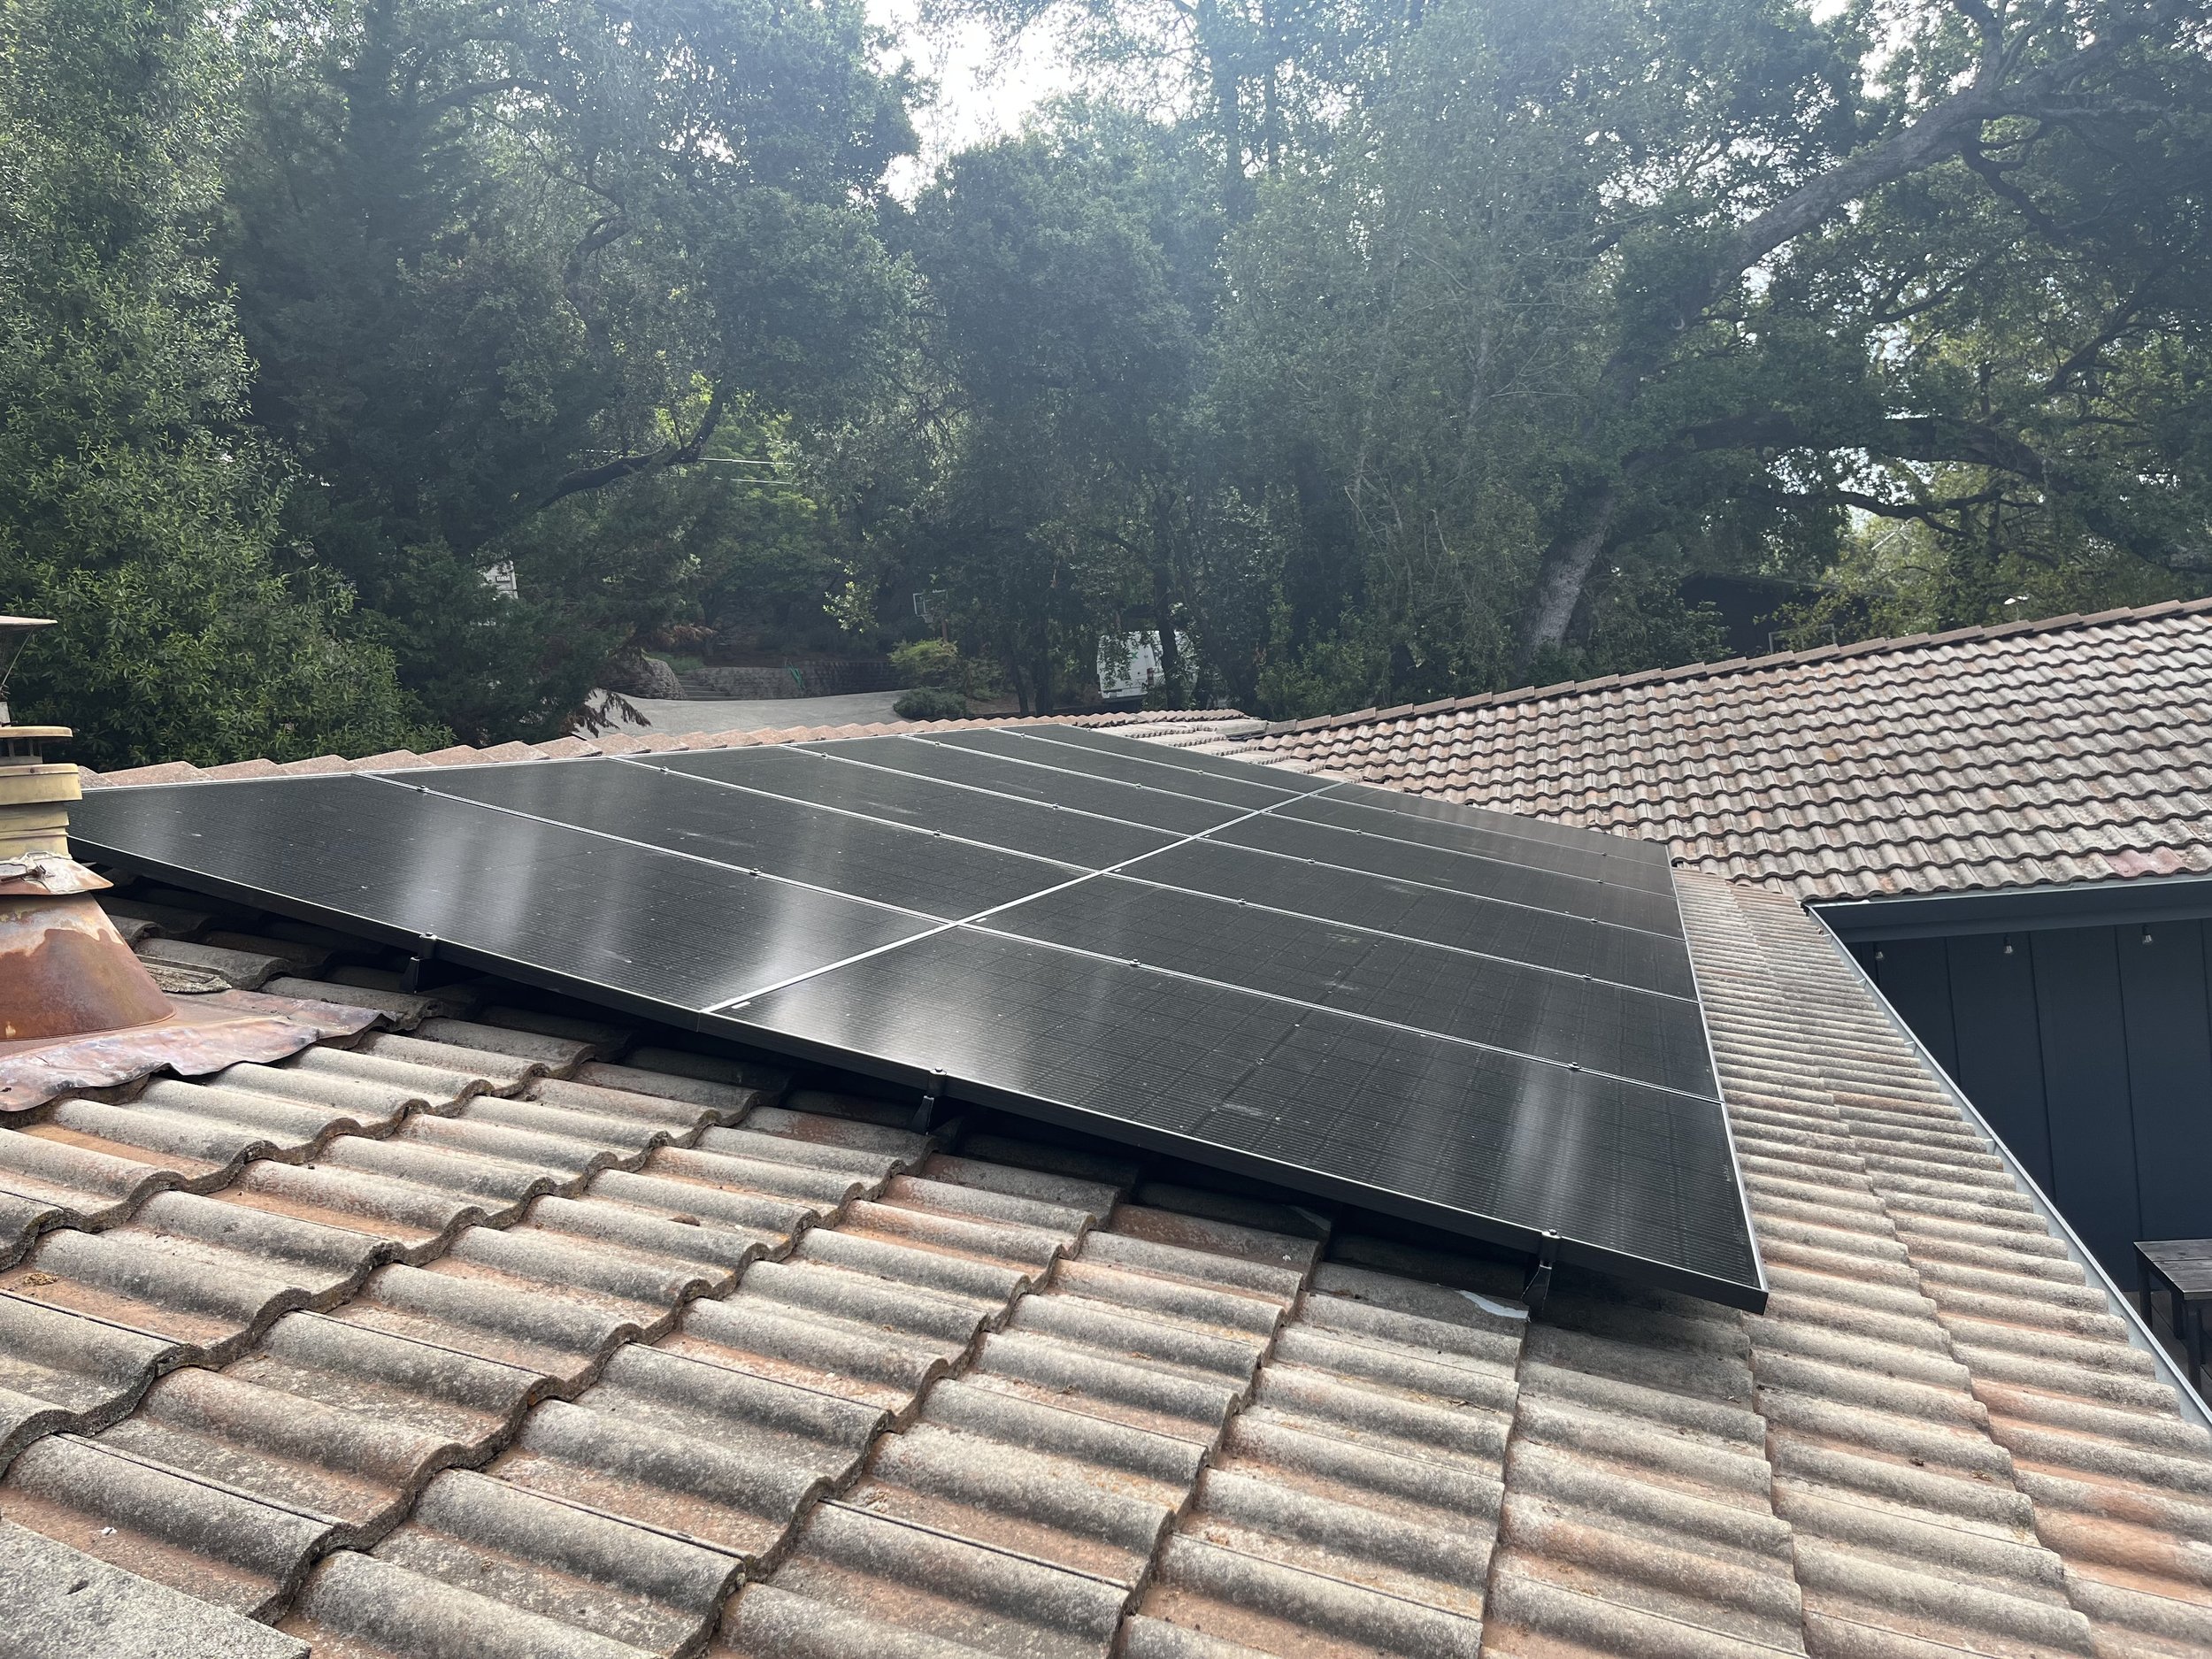 Solar array on tile roof.jpg